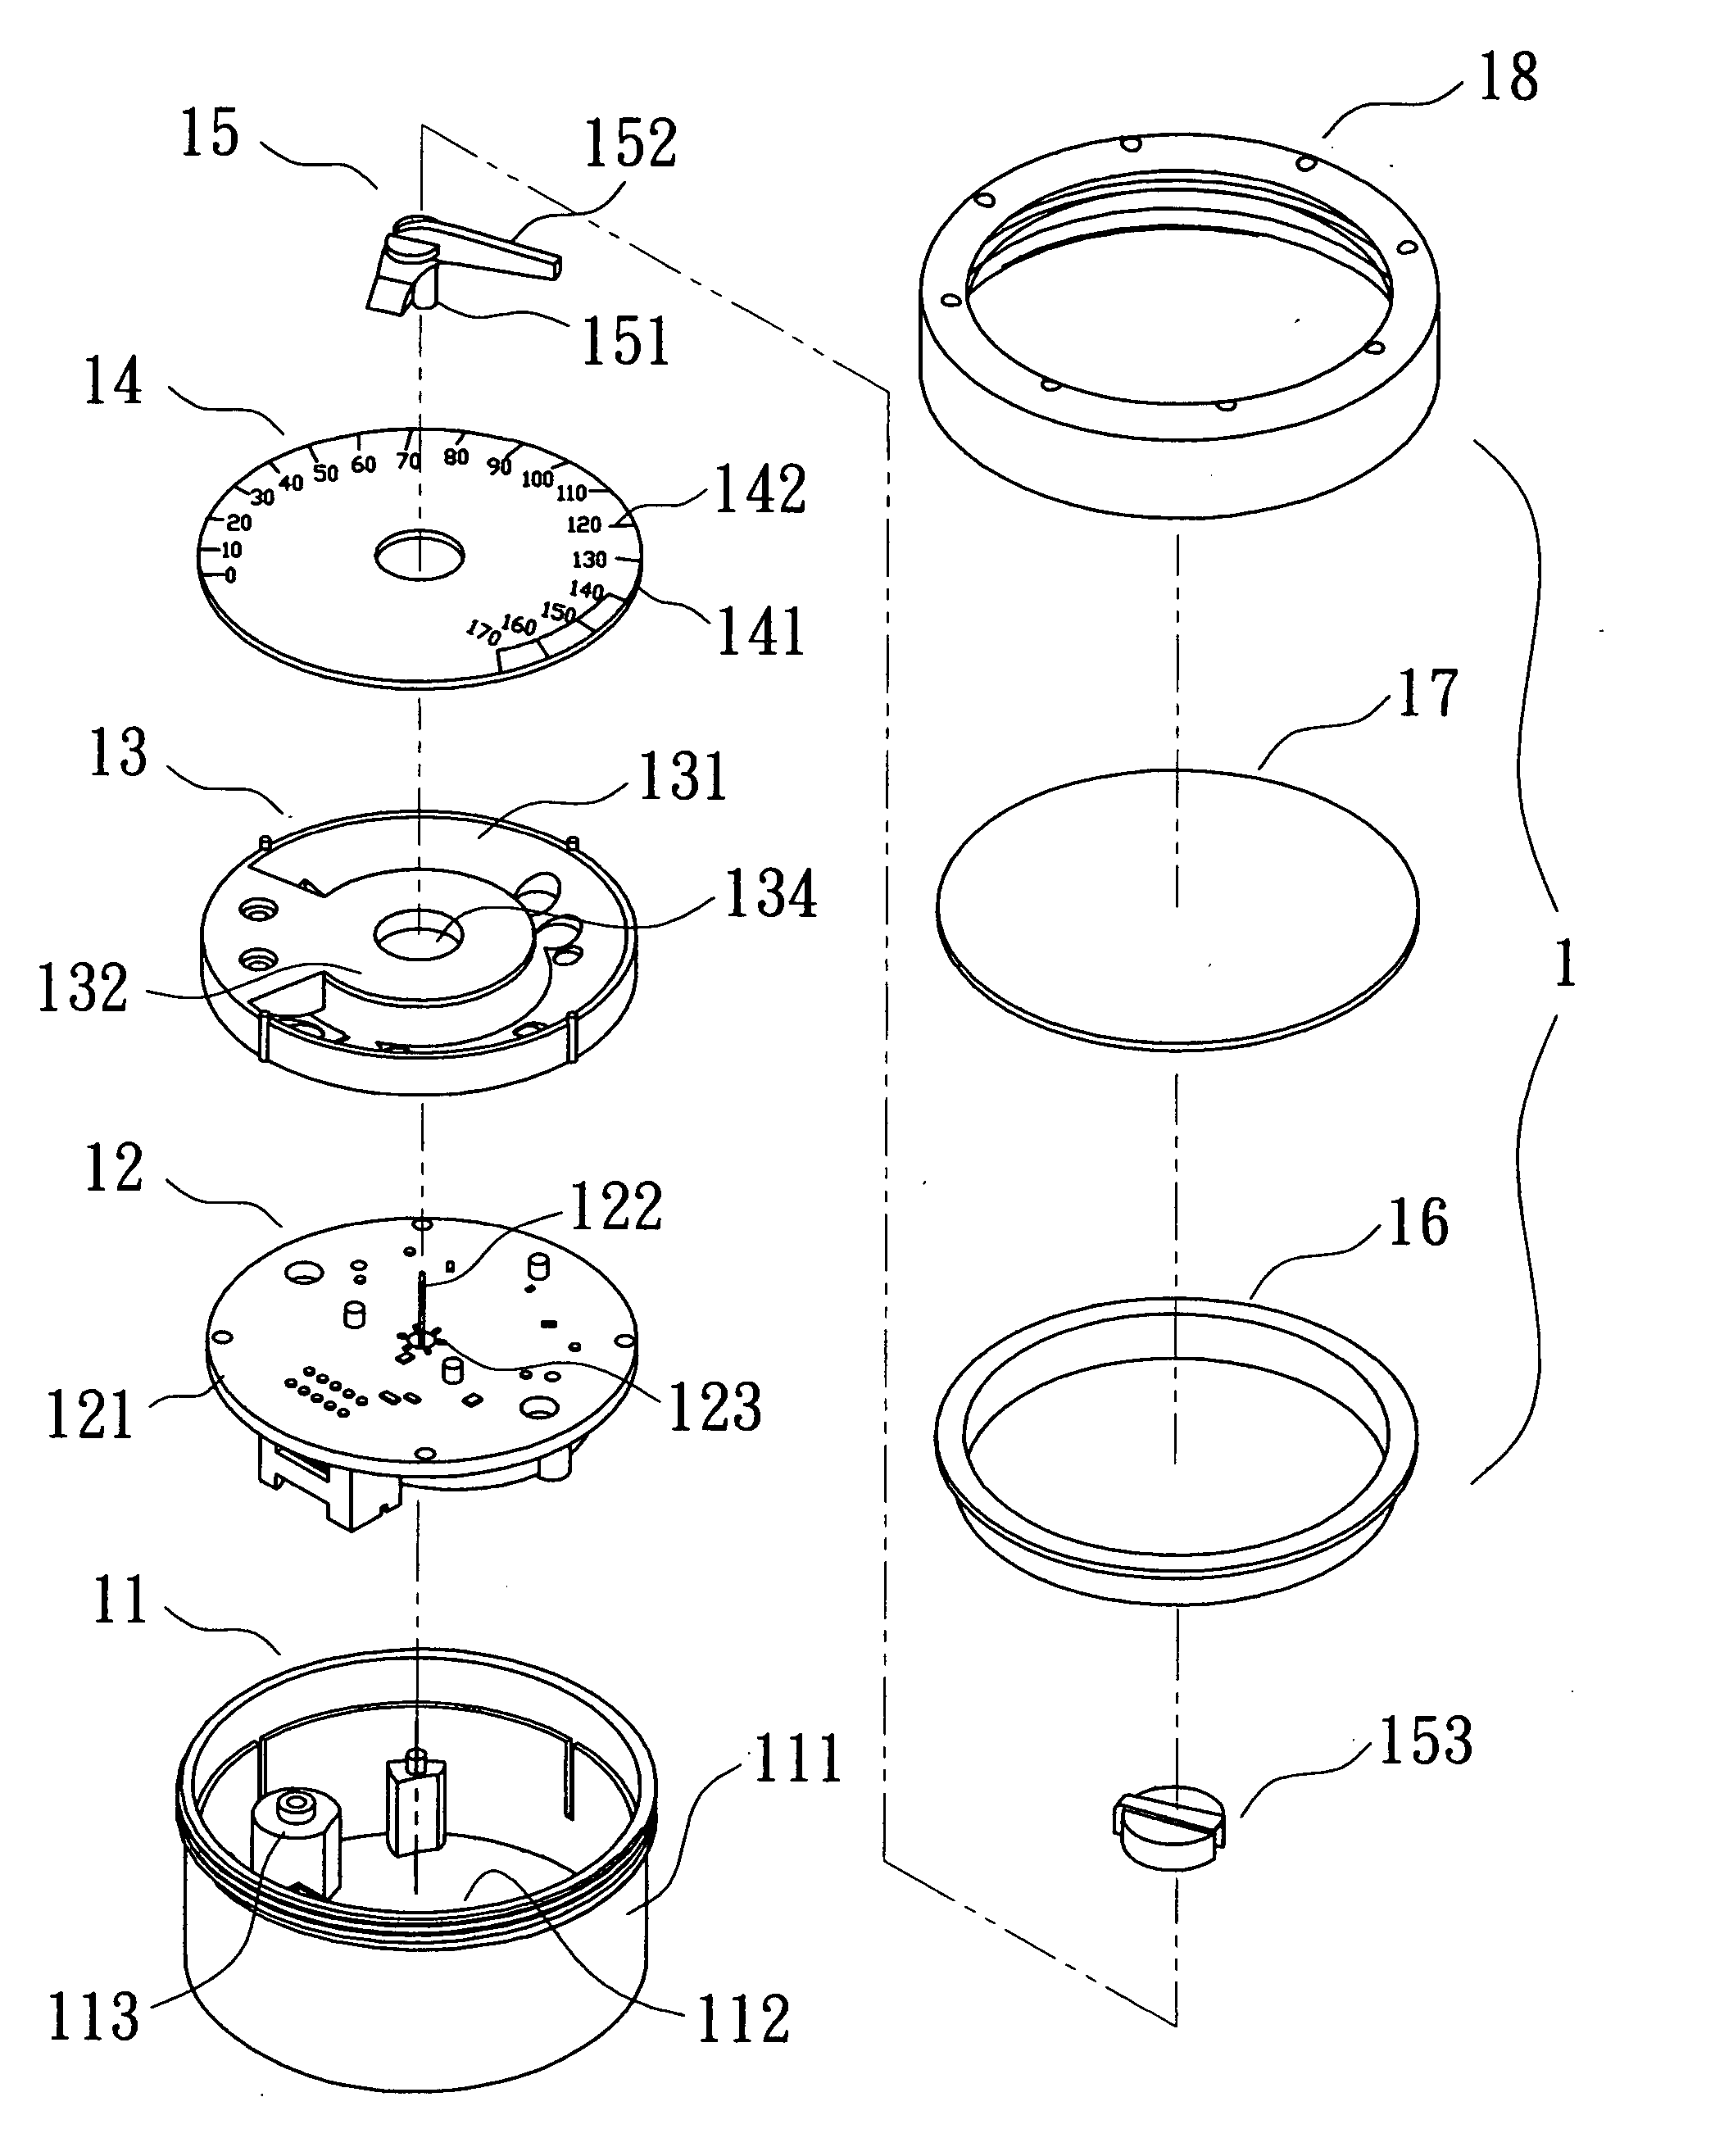 Automobile instrument panel lighting structure